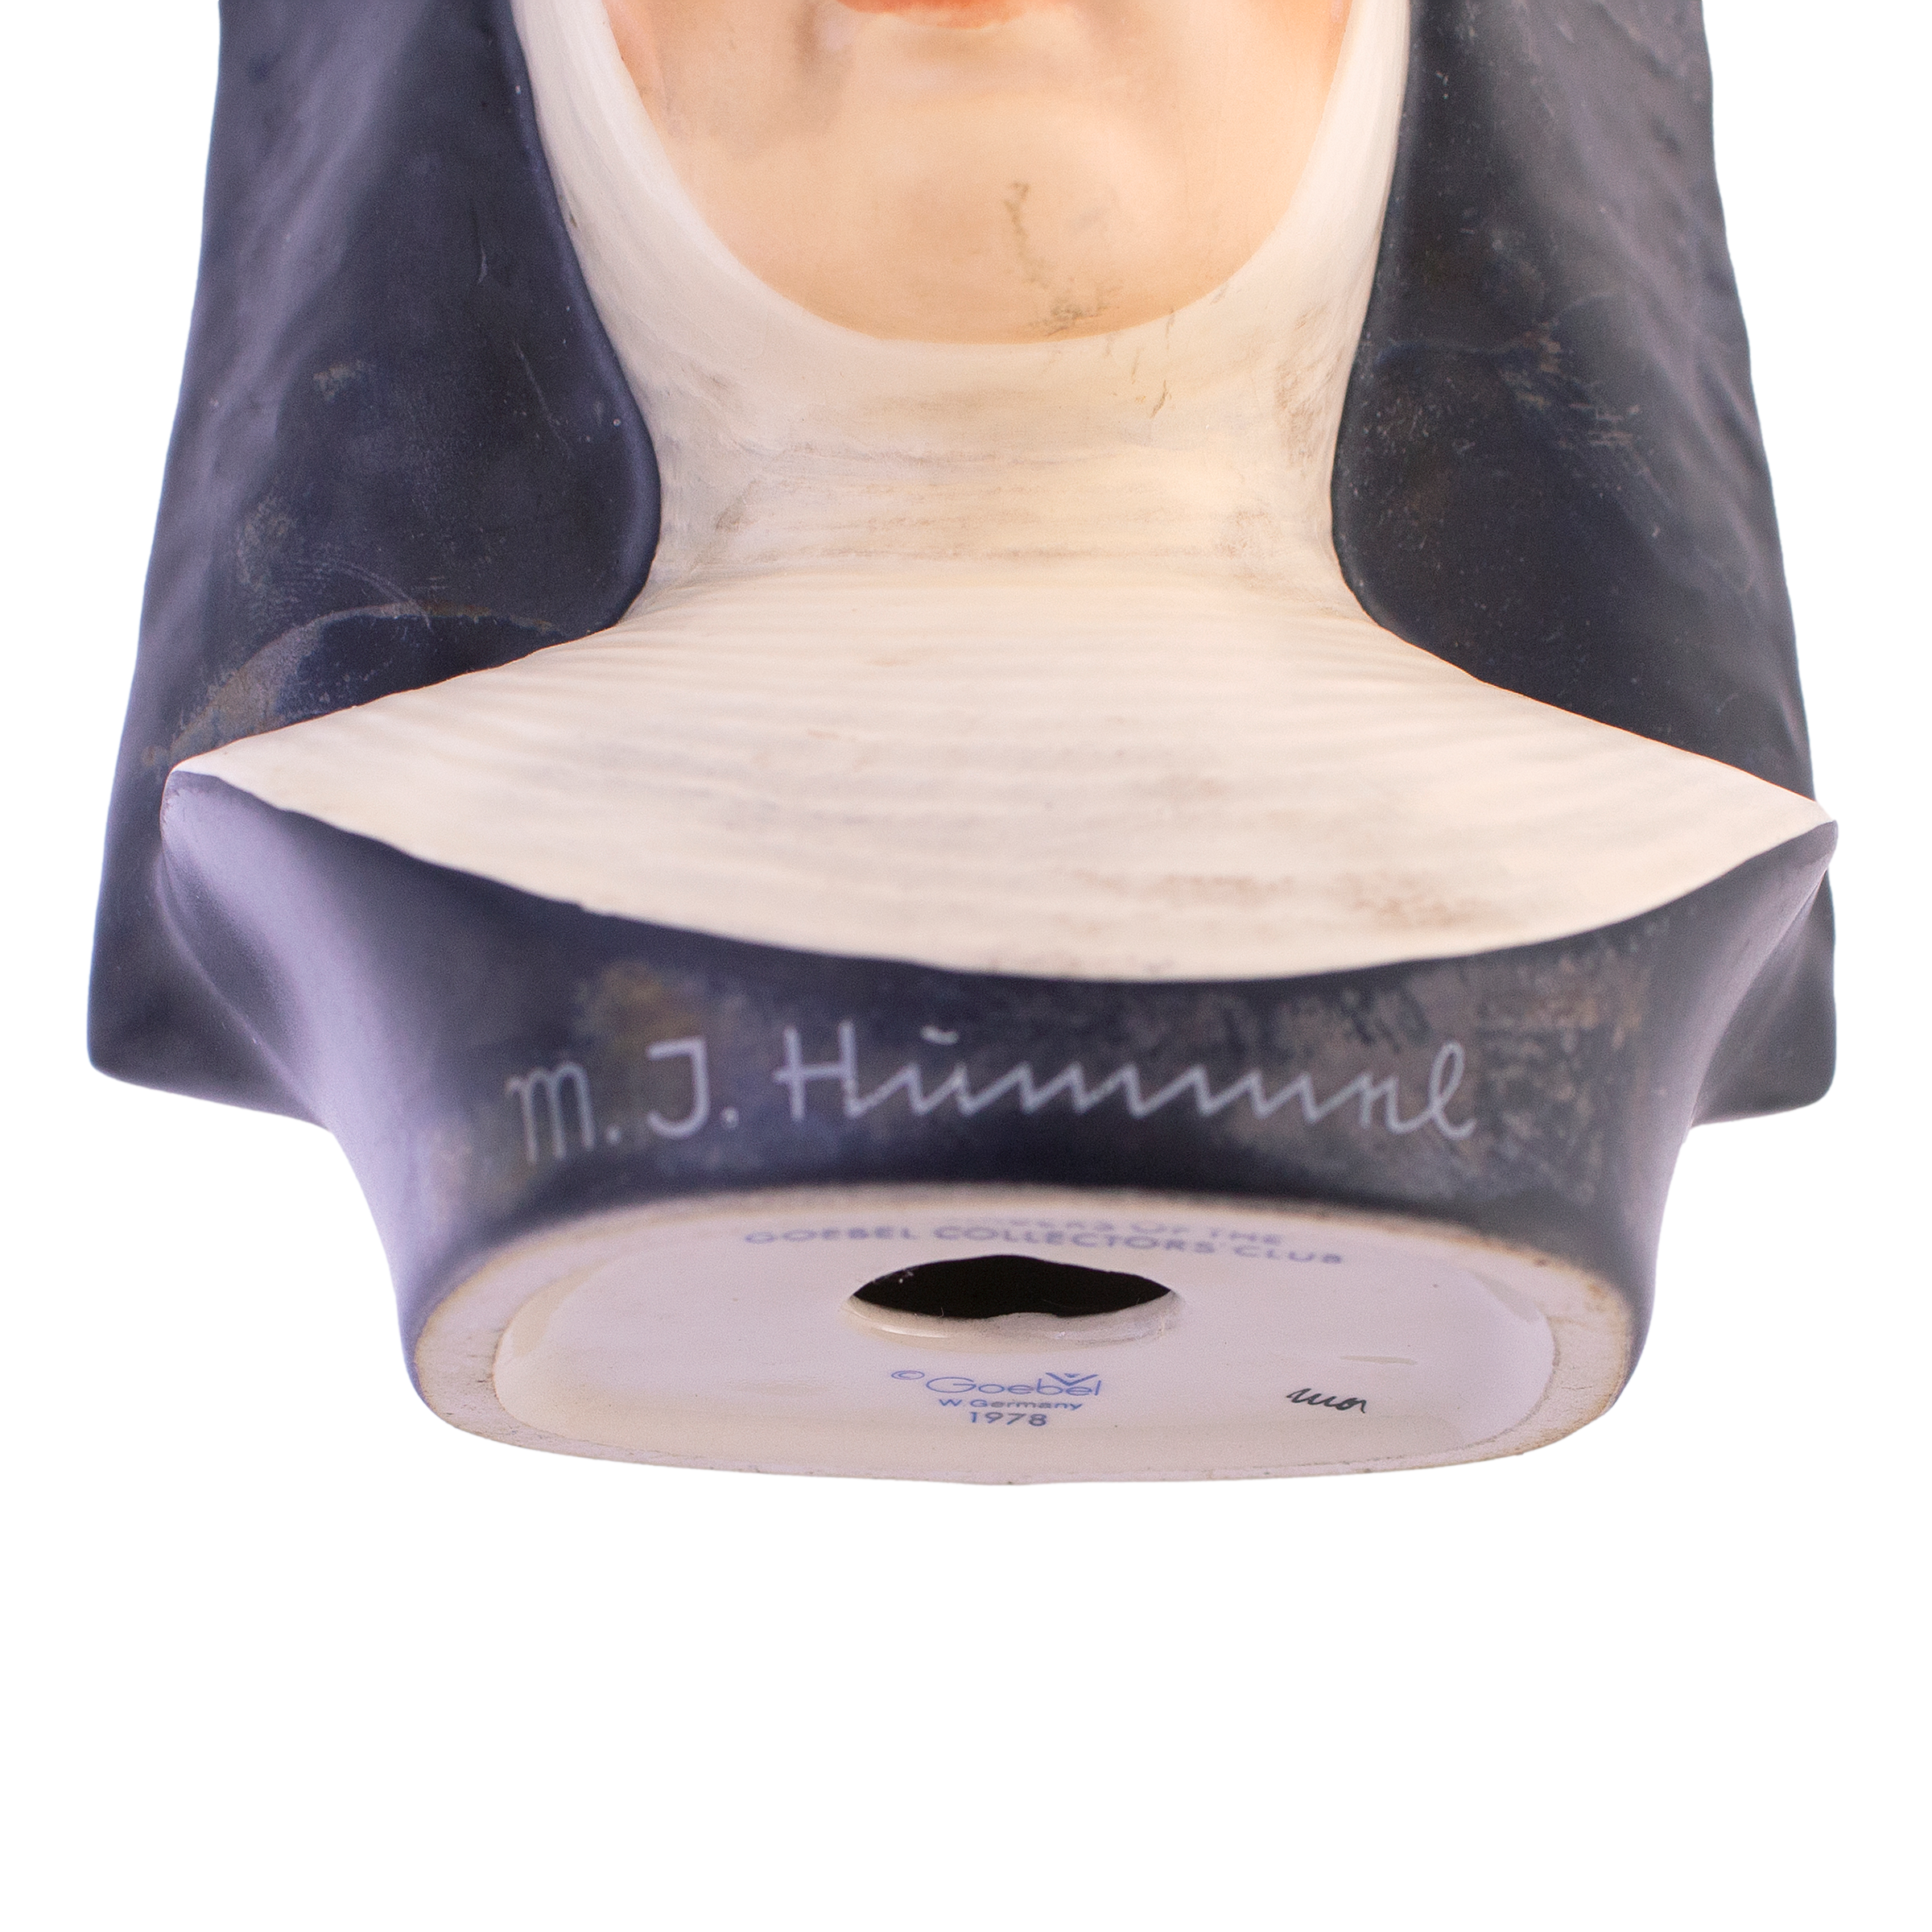 Goebel Collectors Item #3 MJ Hummel Nun Bust